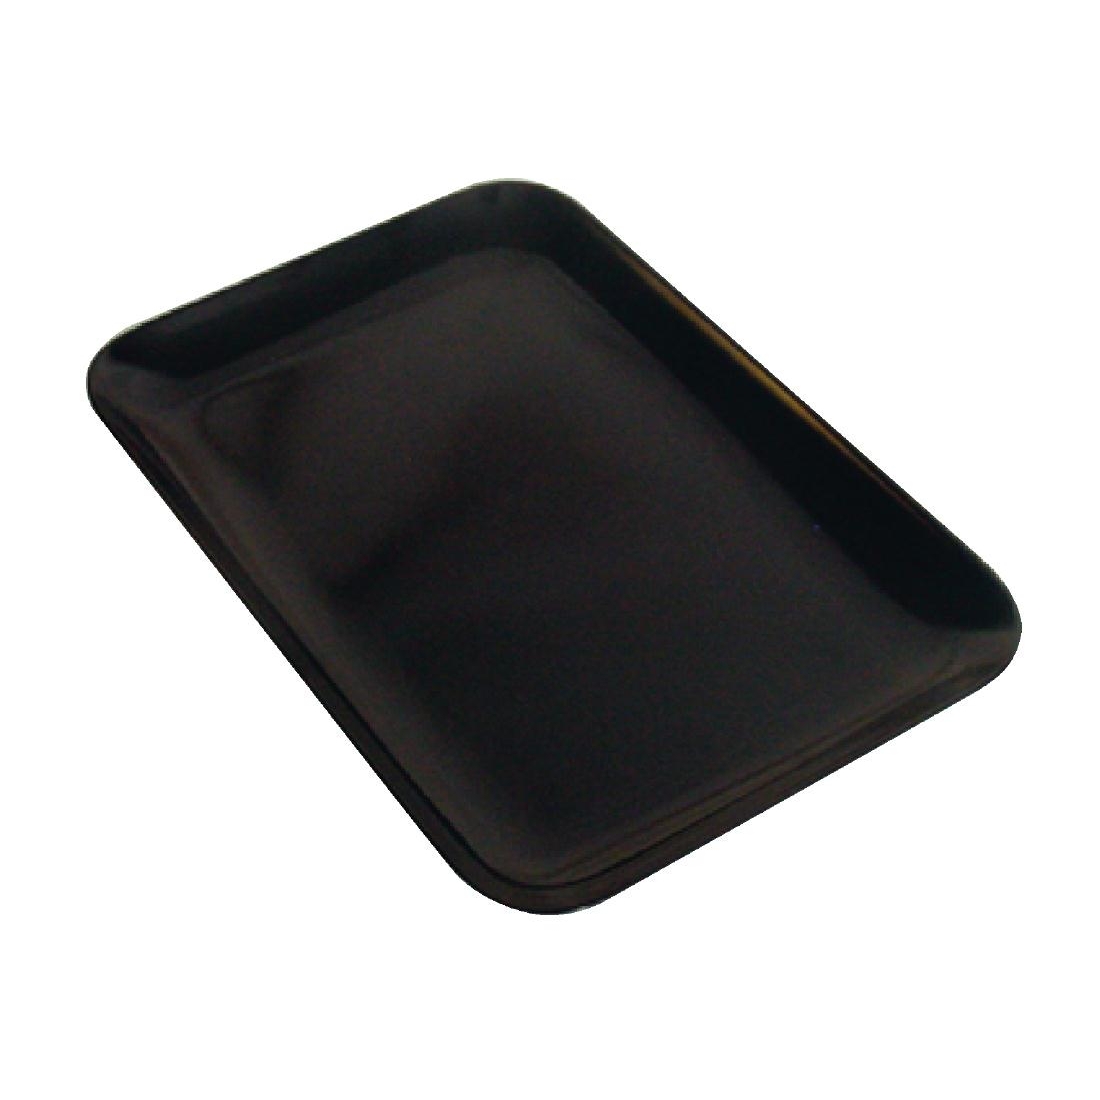 Rectangular Black Medium Platter